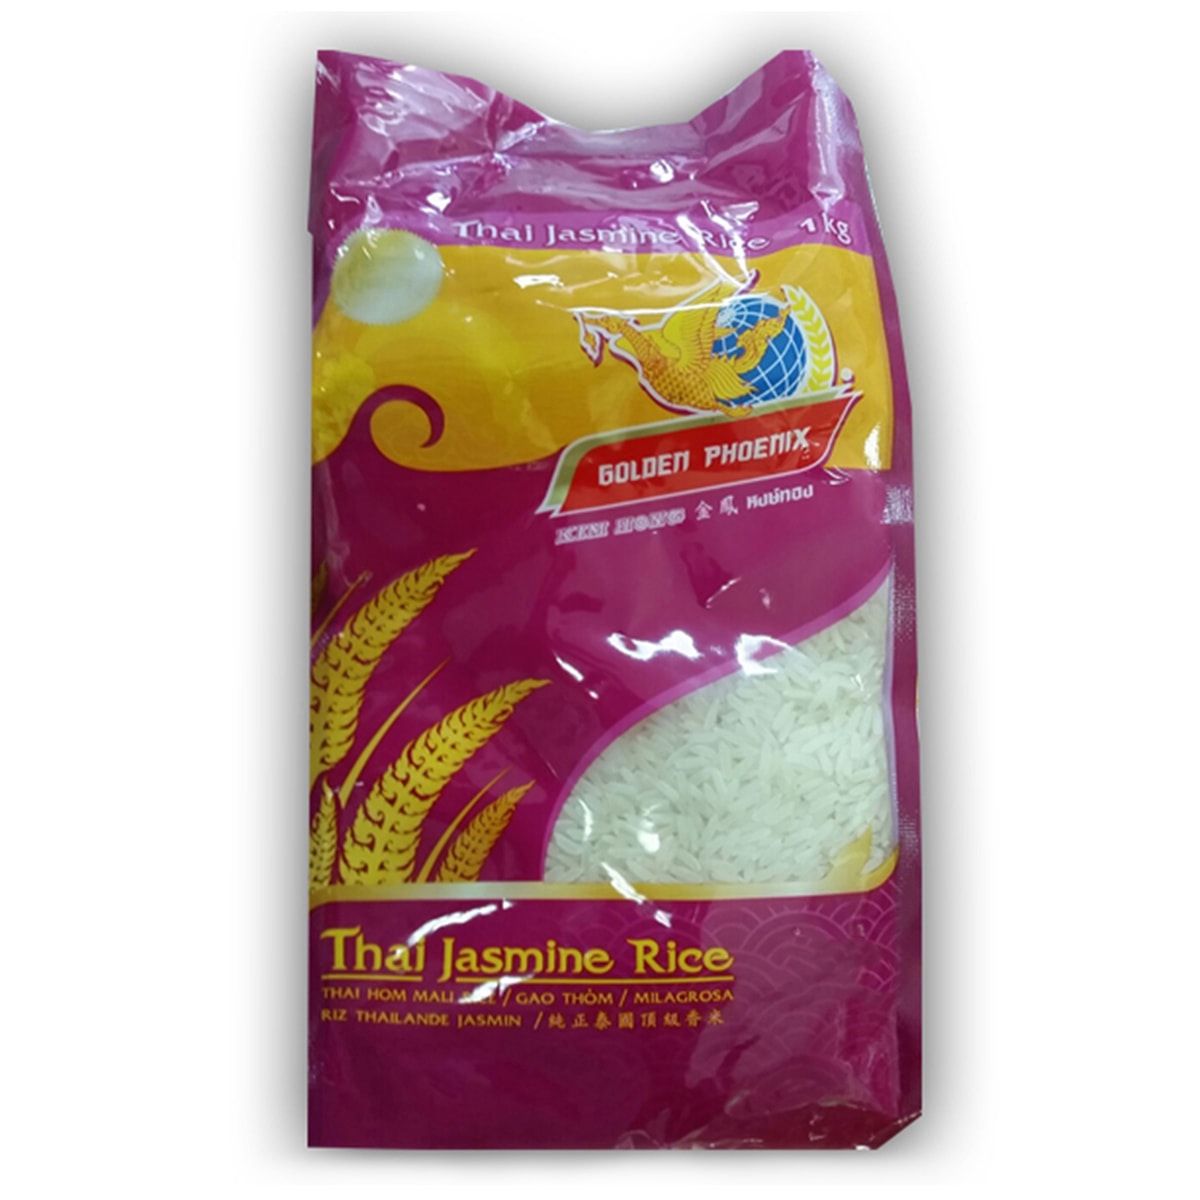 Buy Golden Phoenix Thai Jasmine Rice - 1 kg